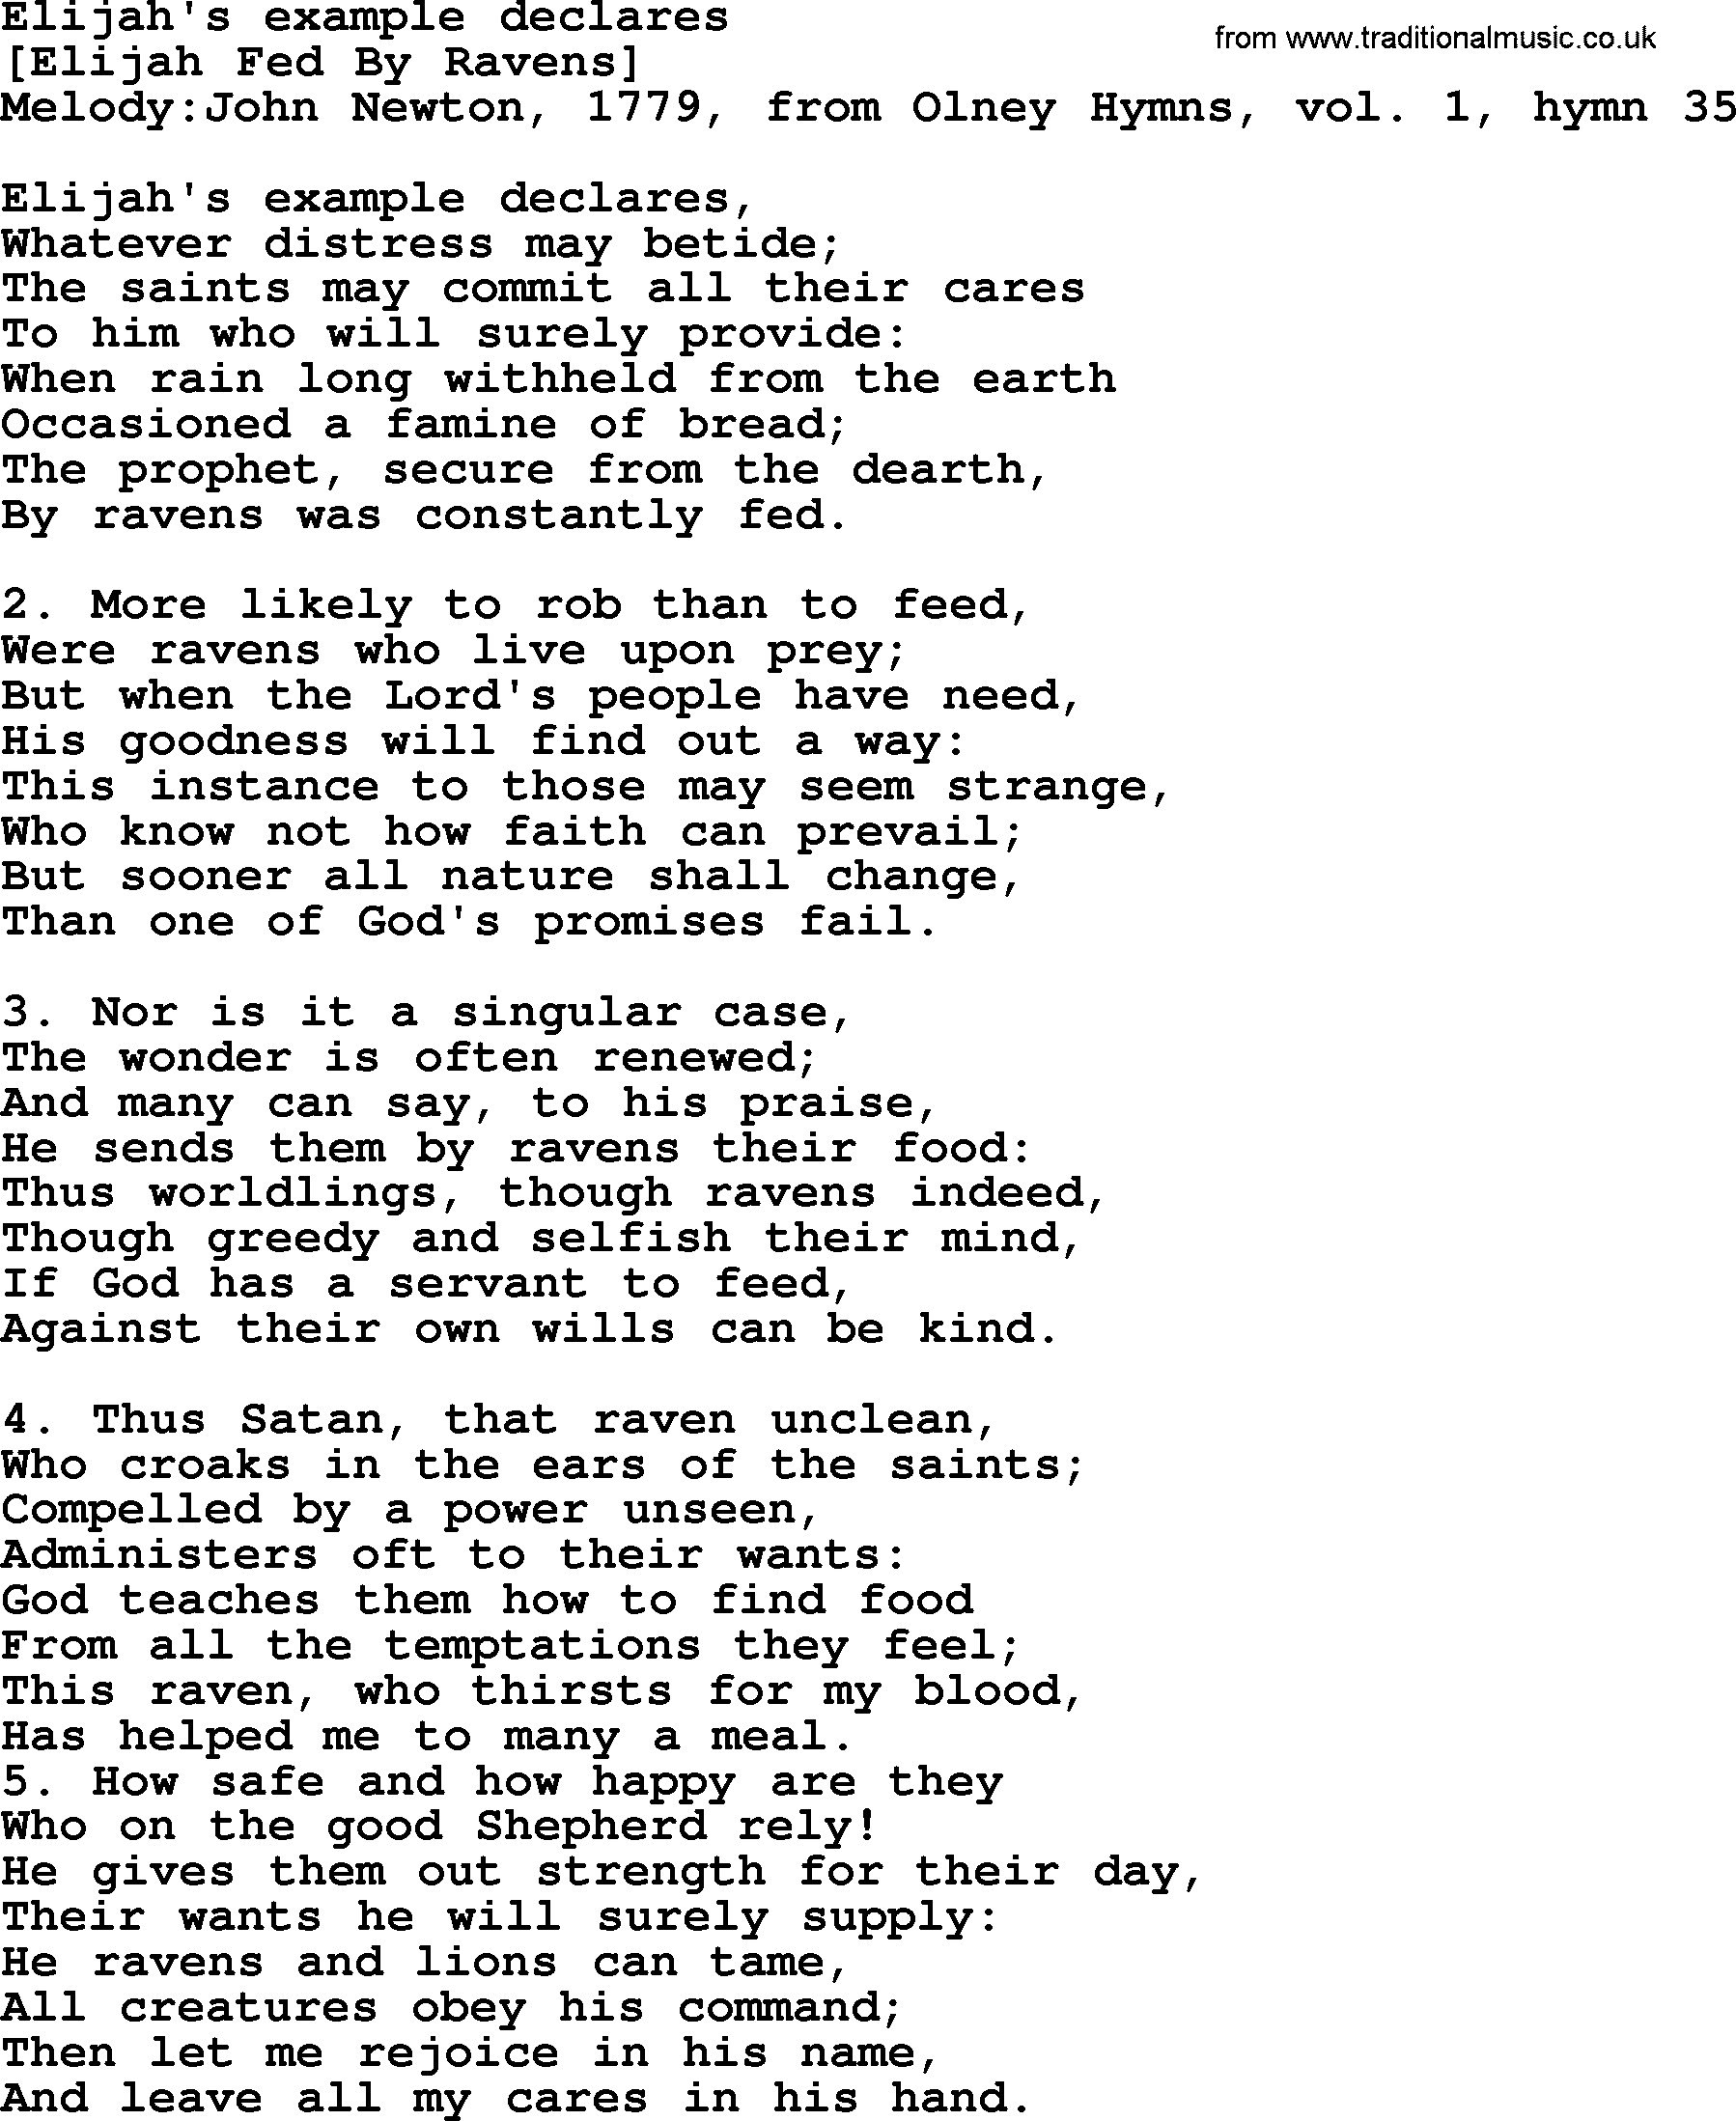 Old English Song: Elijah's Example Declares lyrics